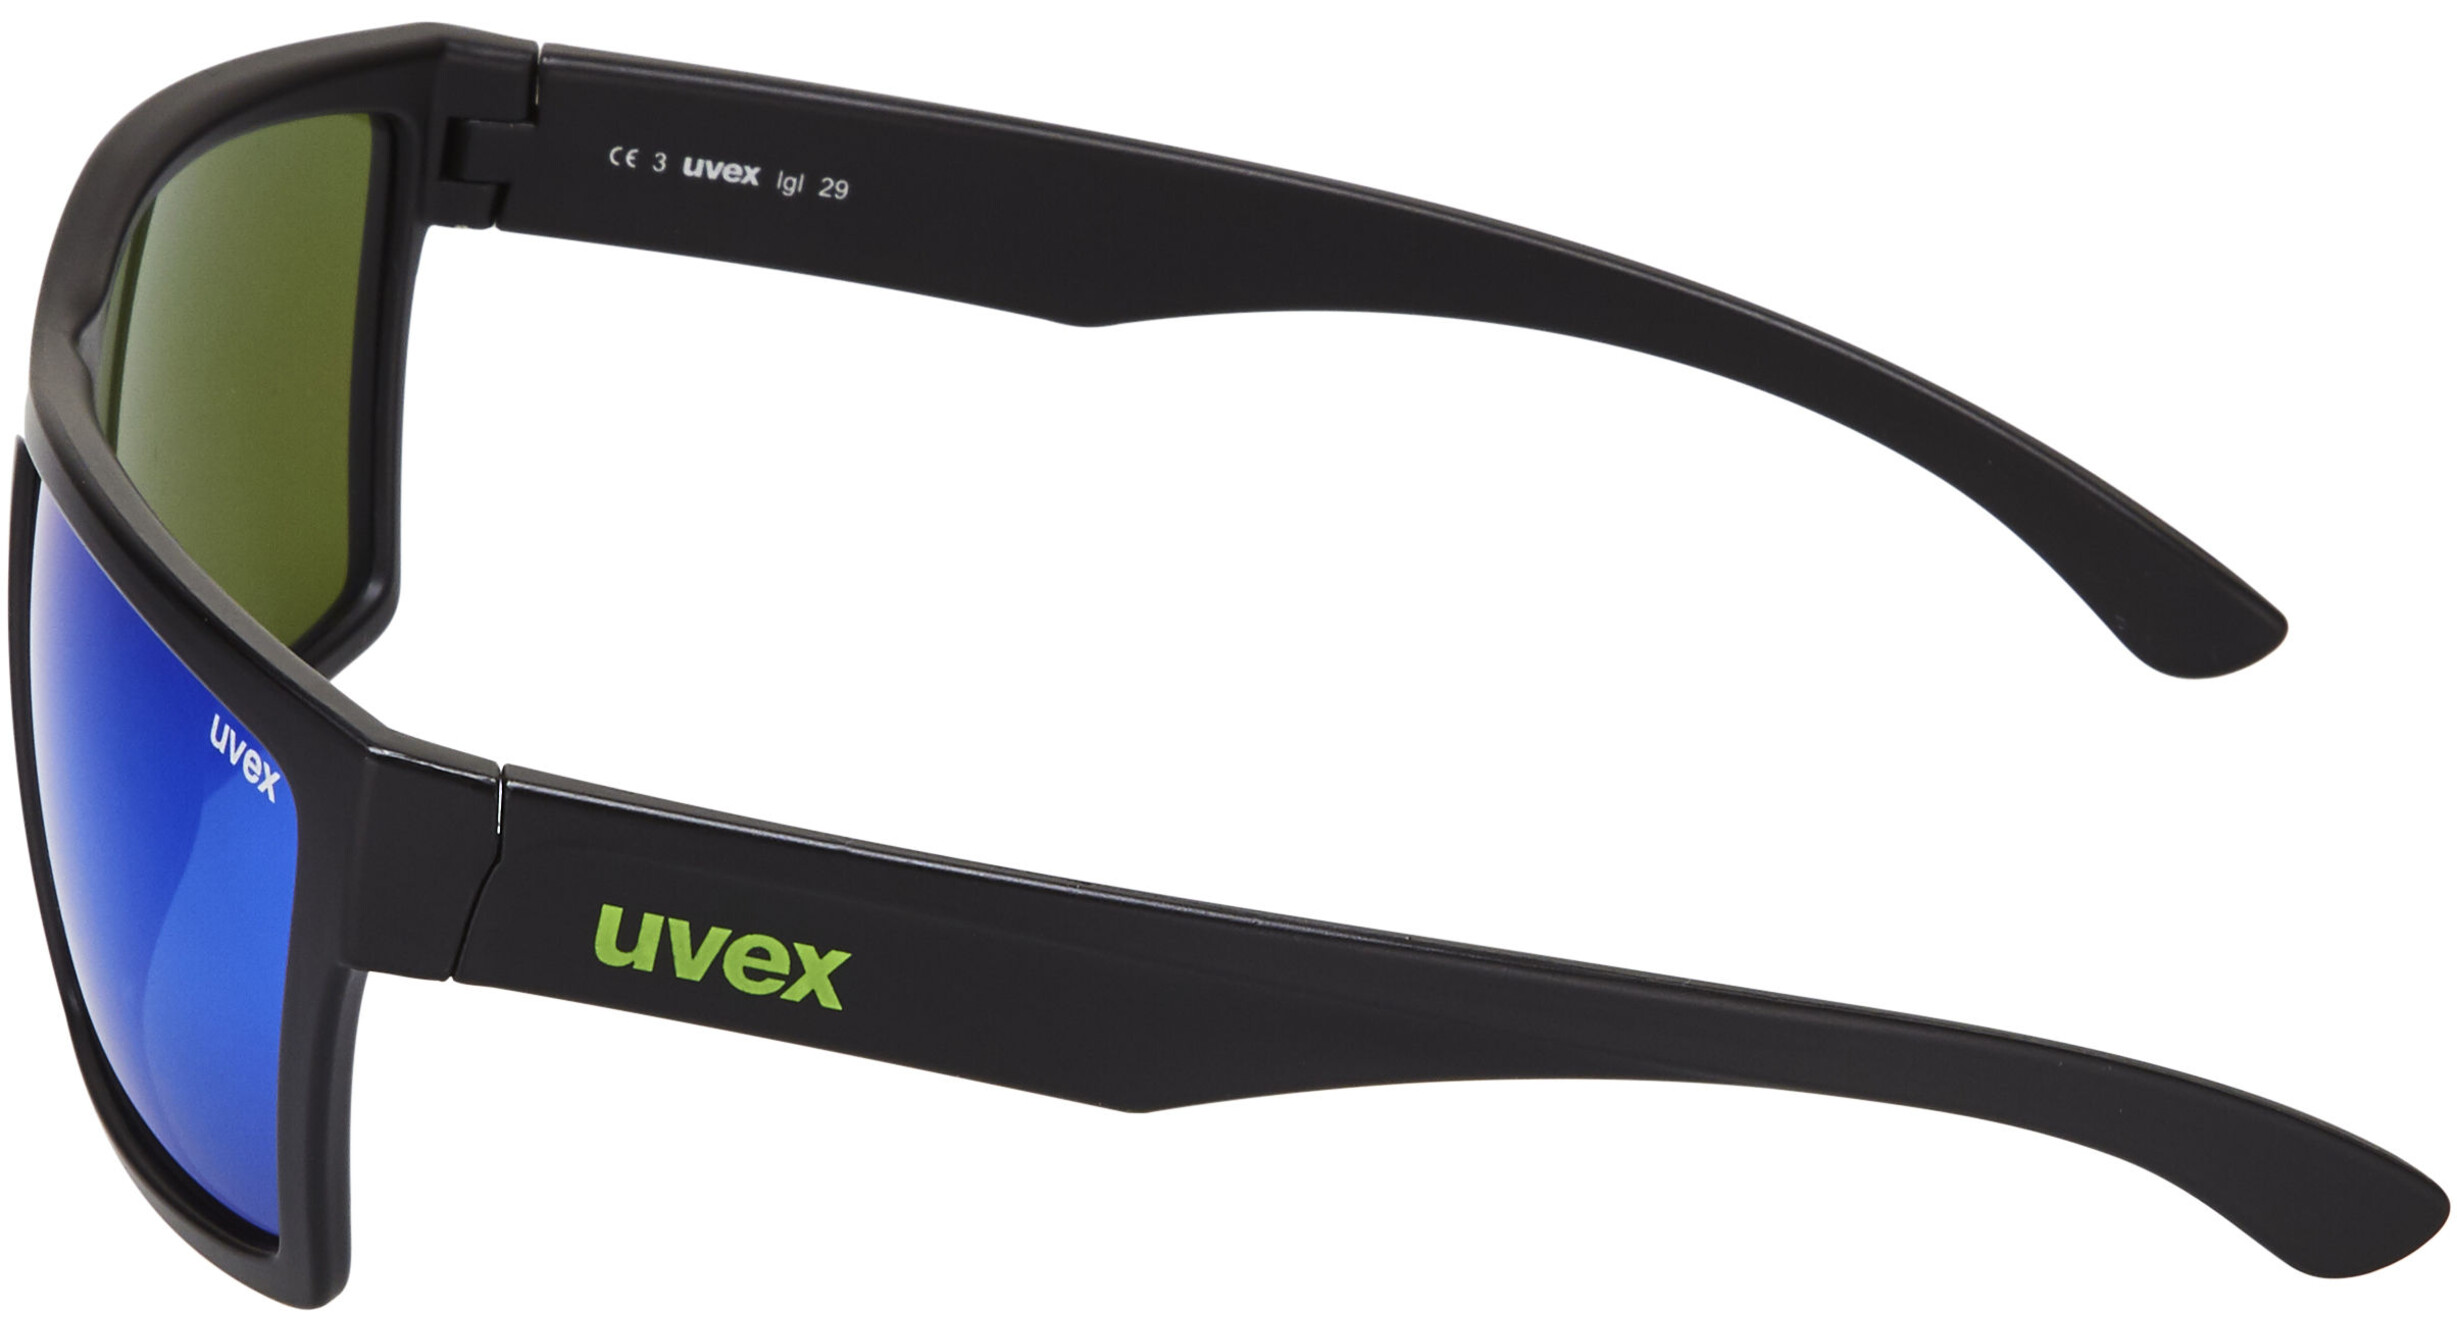 UVEX lgl 29 Glasses black mat at Addnature.co.uk
